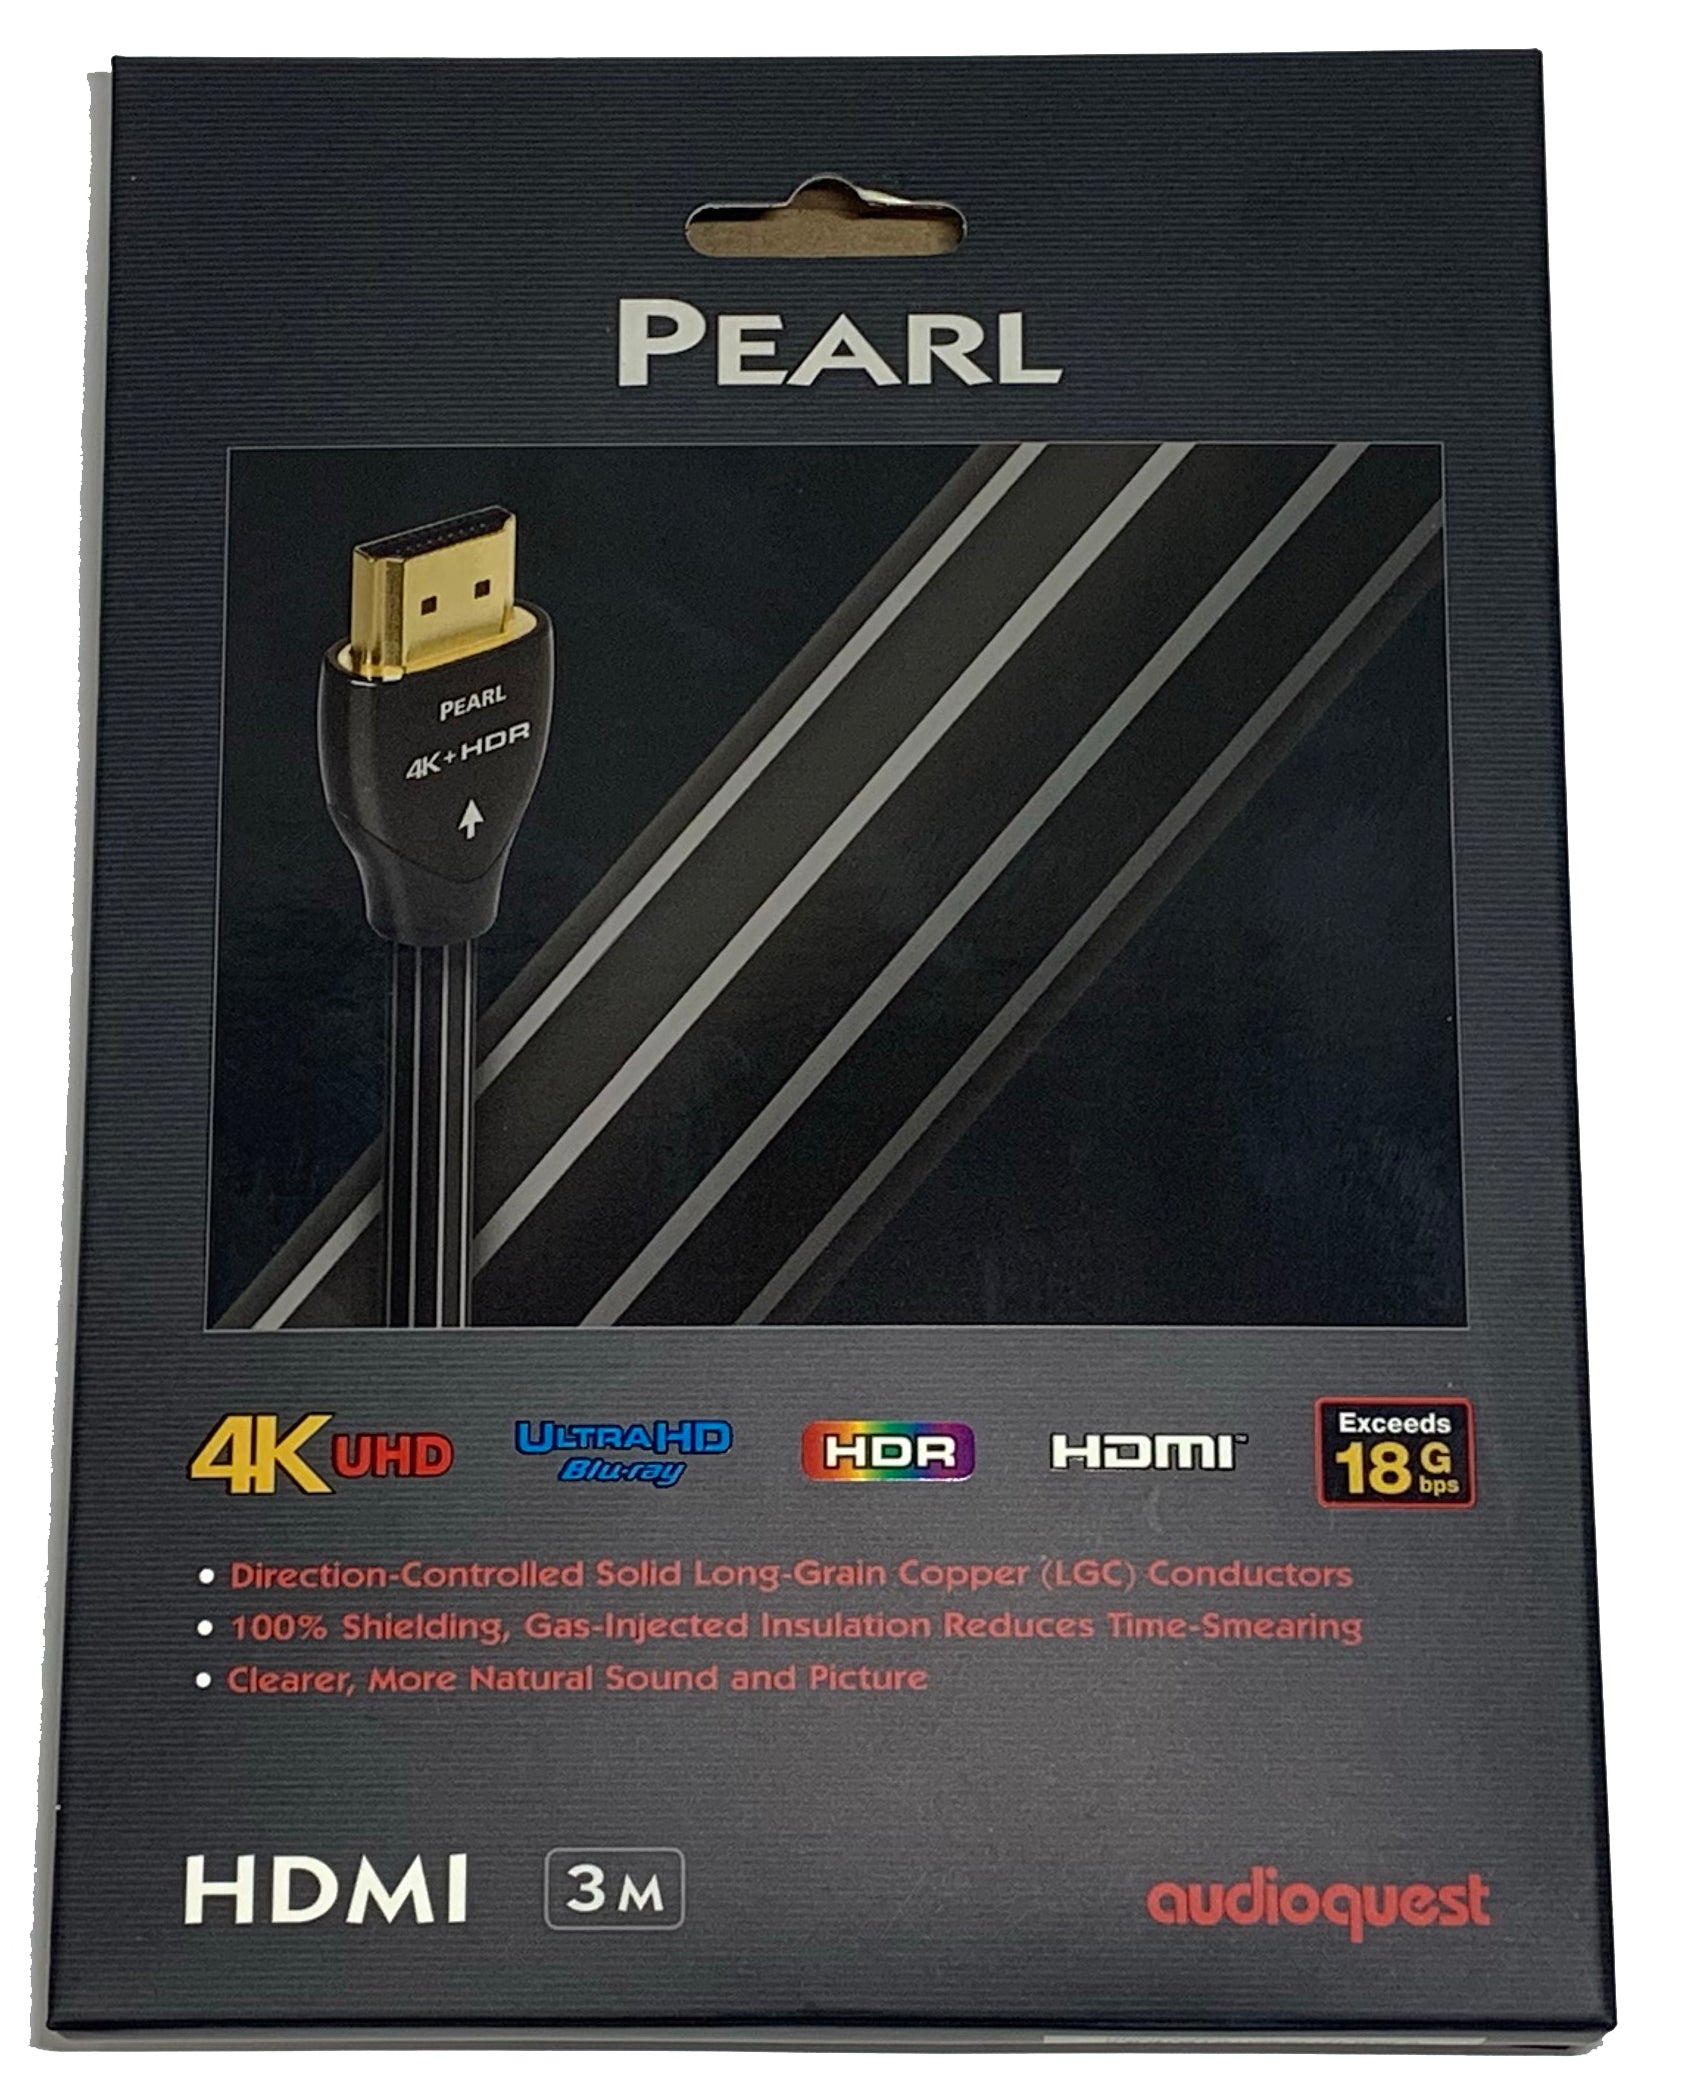 AudioQuest Pearl HDMI 4K UHD HDR 3m (10') – Custom Audio Shop